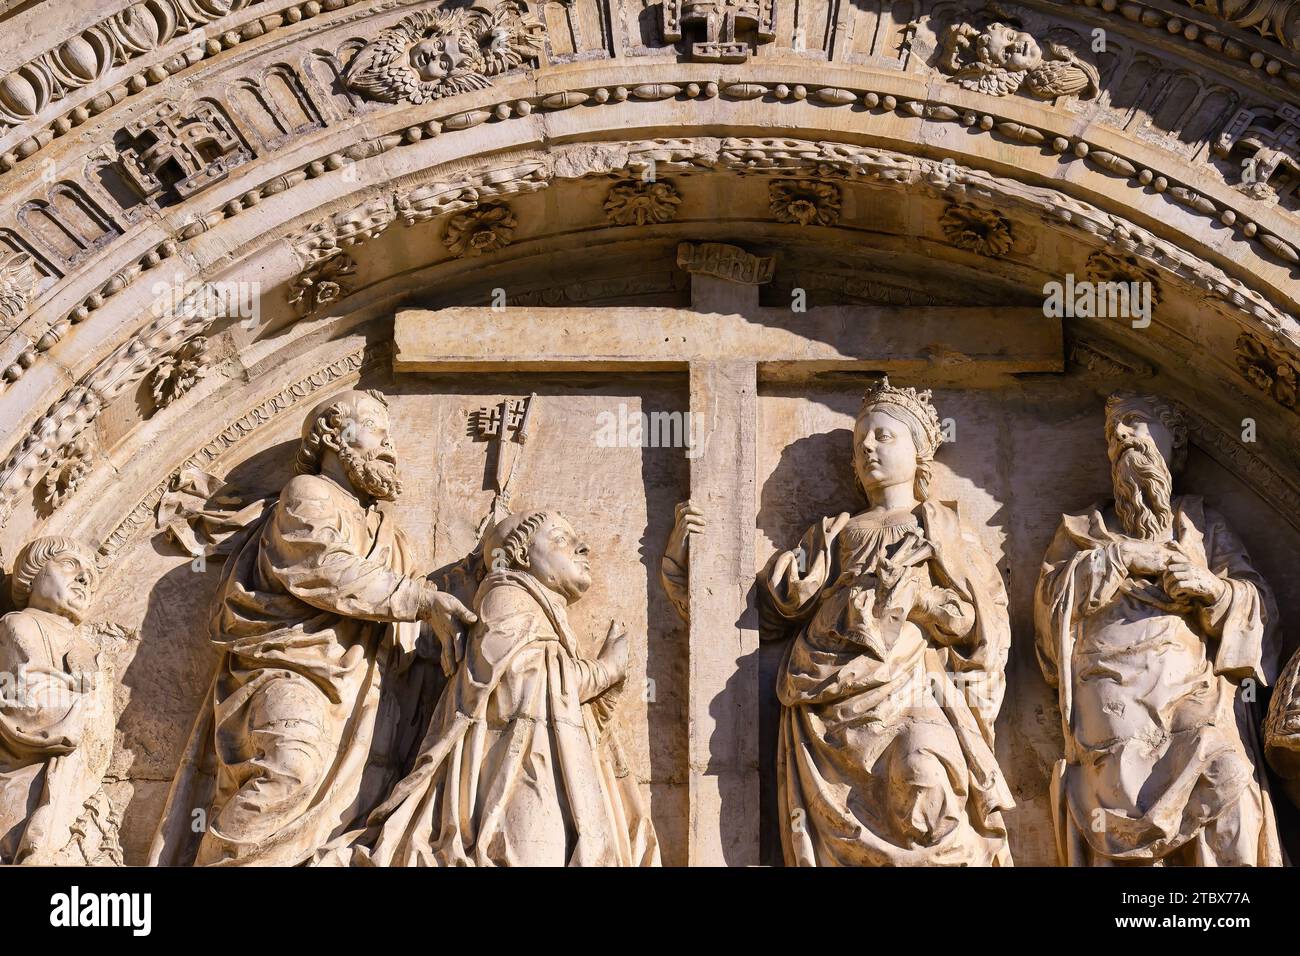 Medieval architecture in the facade of Santa Cruz Museum in Toledo, Spain Stock Photo